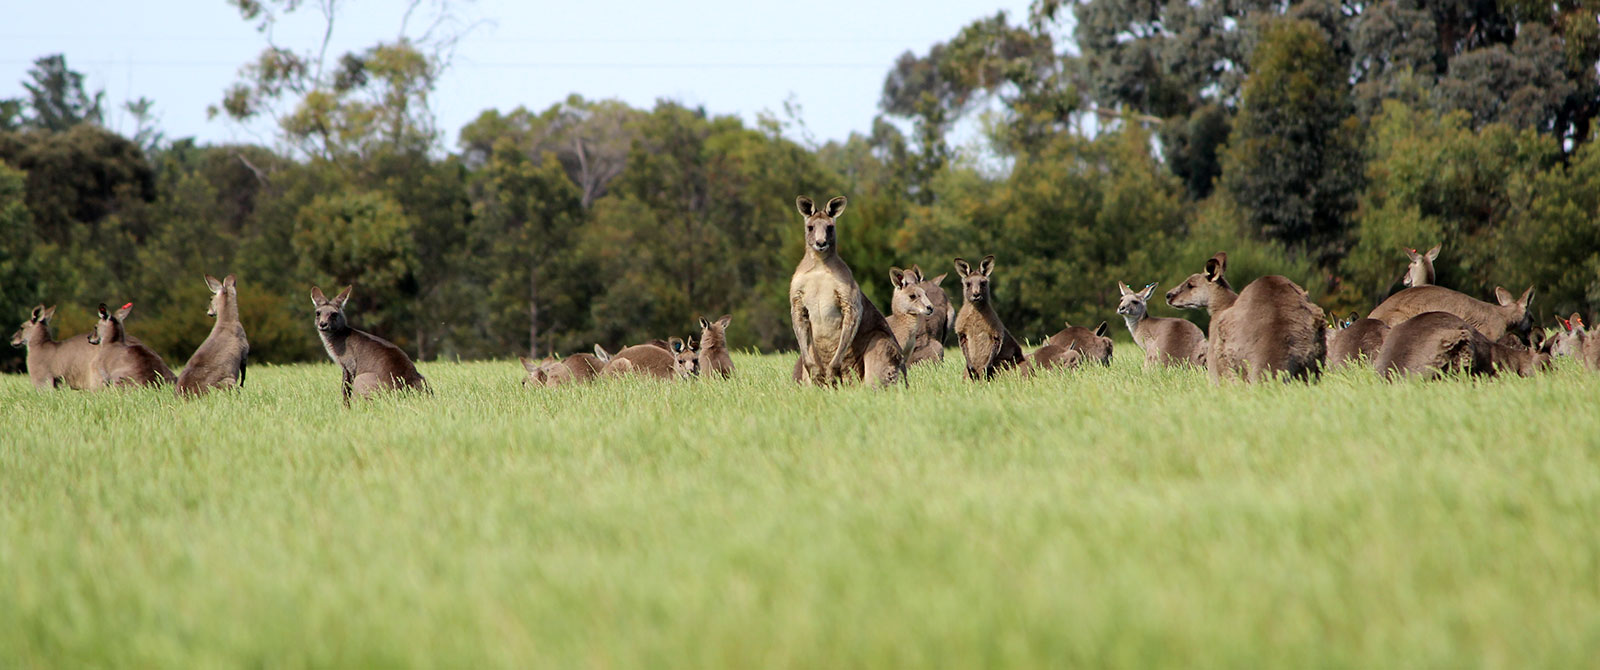 Wild Kangaroos in Australia - Echidna Walkabout Nature Tours, Melbourne